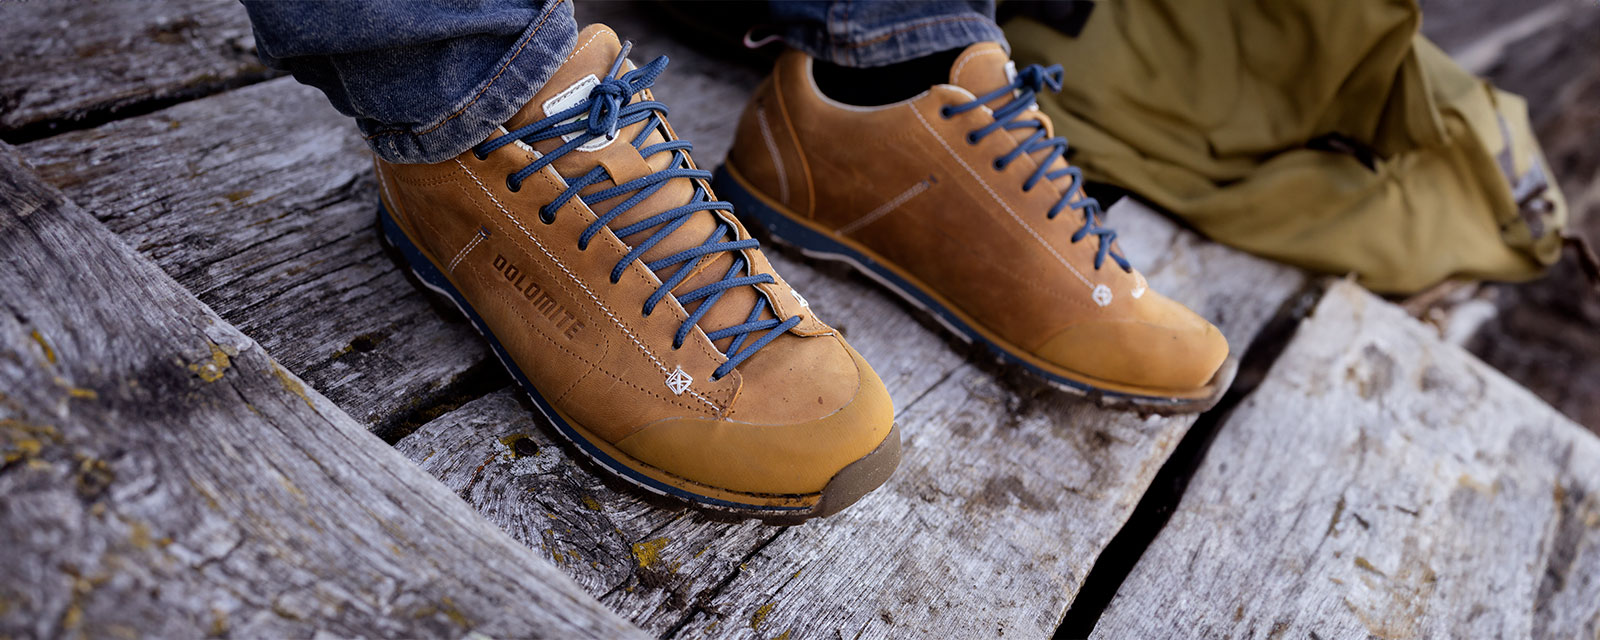 Dolomite Lifestyle footwear for Men